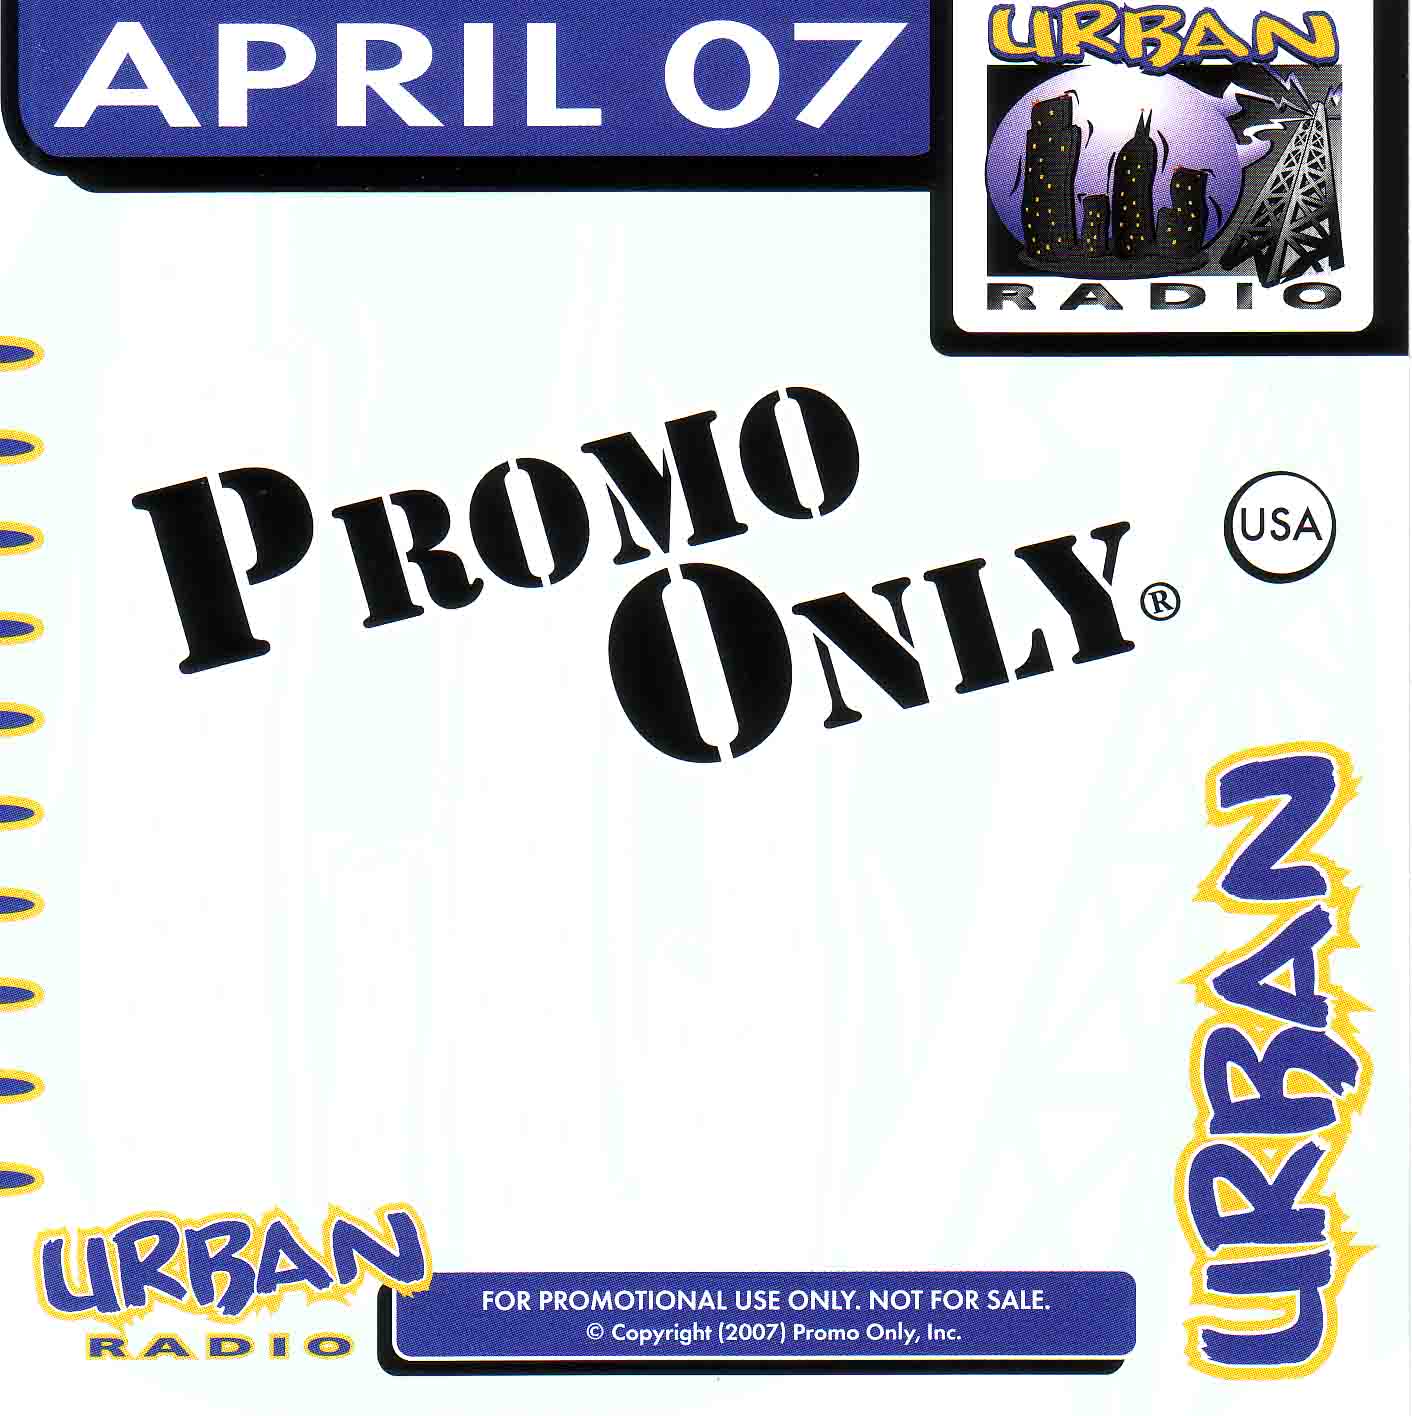 http://3.bp.blogspot.com/_9cw-jhhRBE4/S_6gznuoL2I/AAAAAAAADZo/QNFxjdzHRds/s1600/00-va-promo_only_urban_radio_april-2007-front.jpg